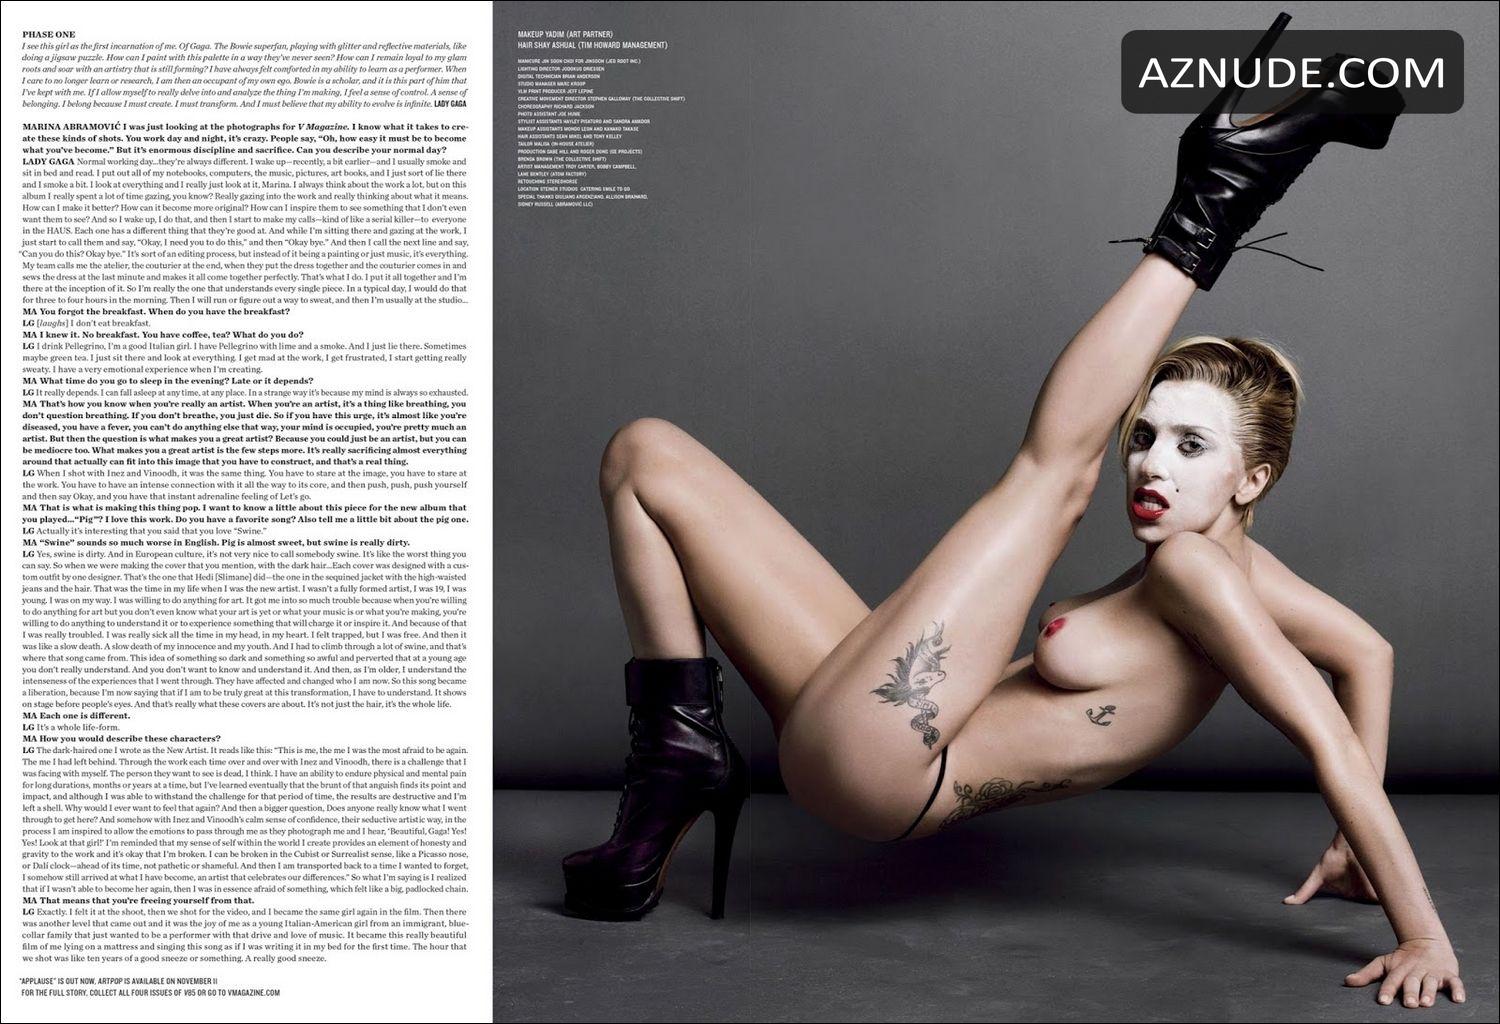 Lady Gaga Topless From The Art Of Pop V Magazine No 85 Aznude